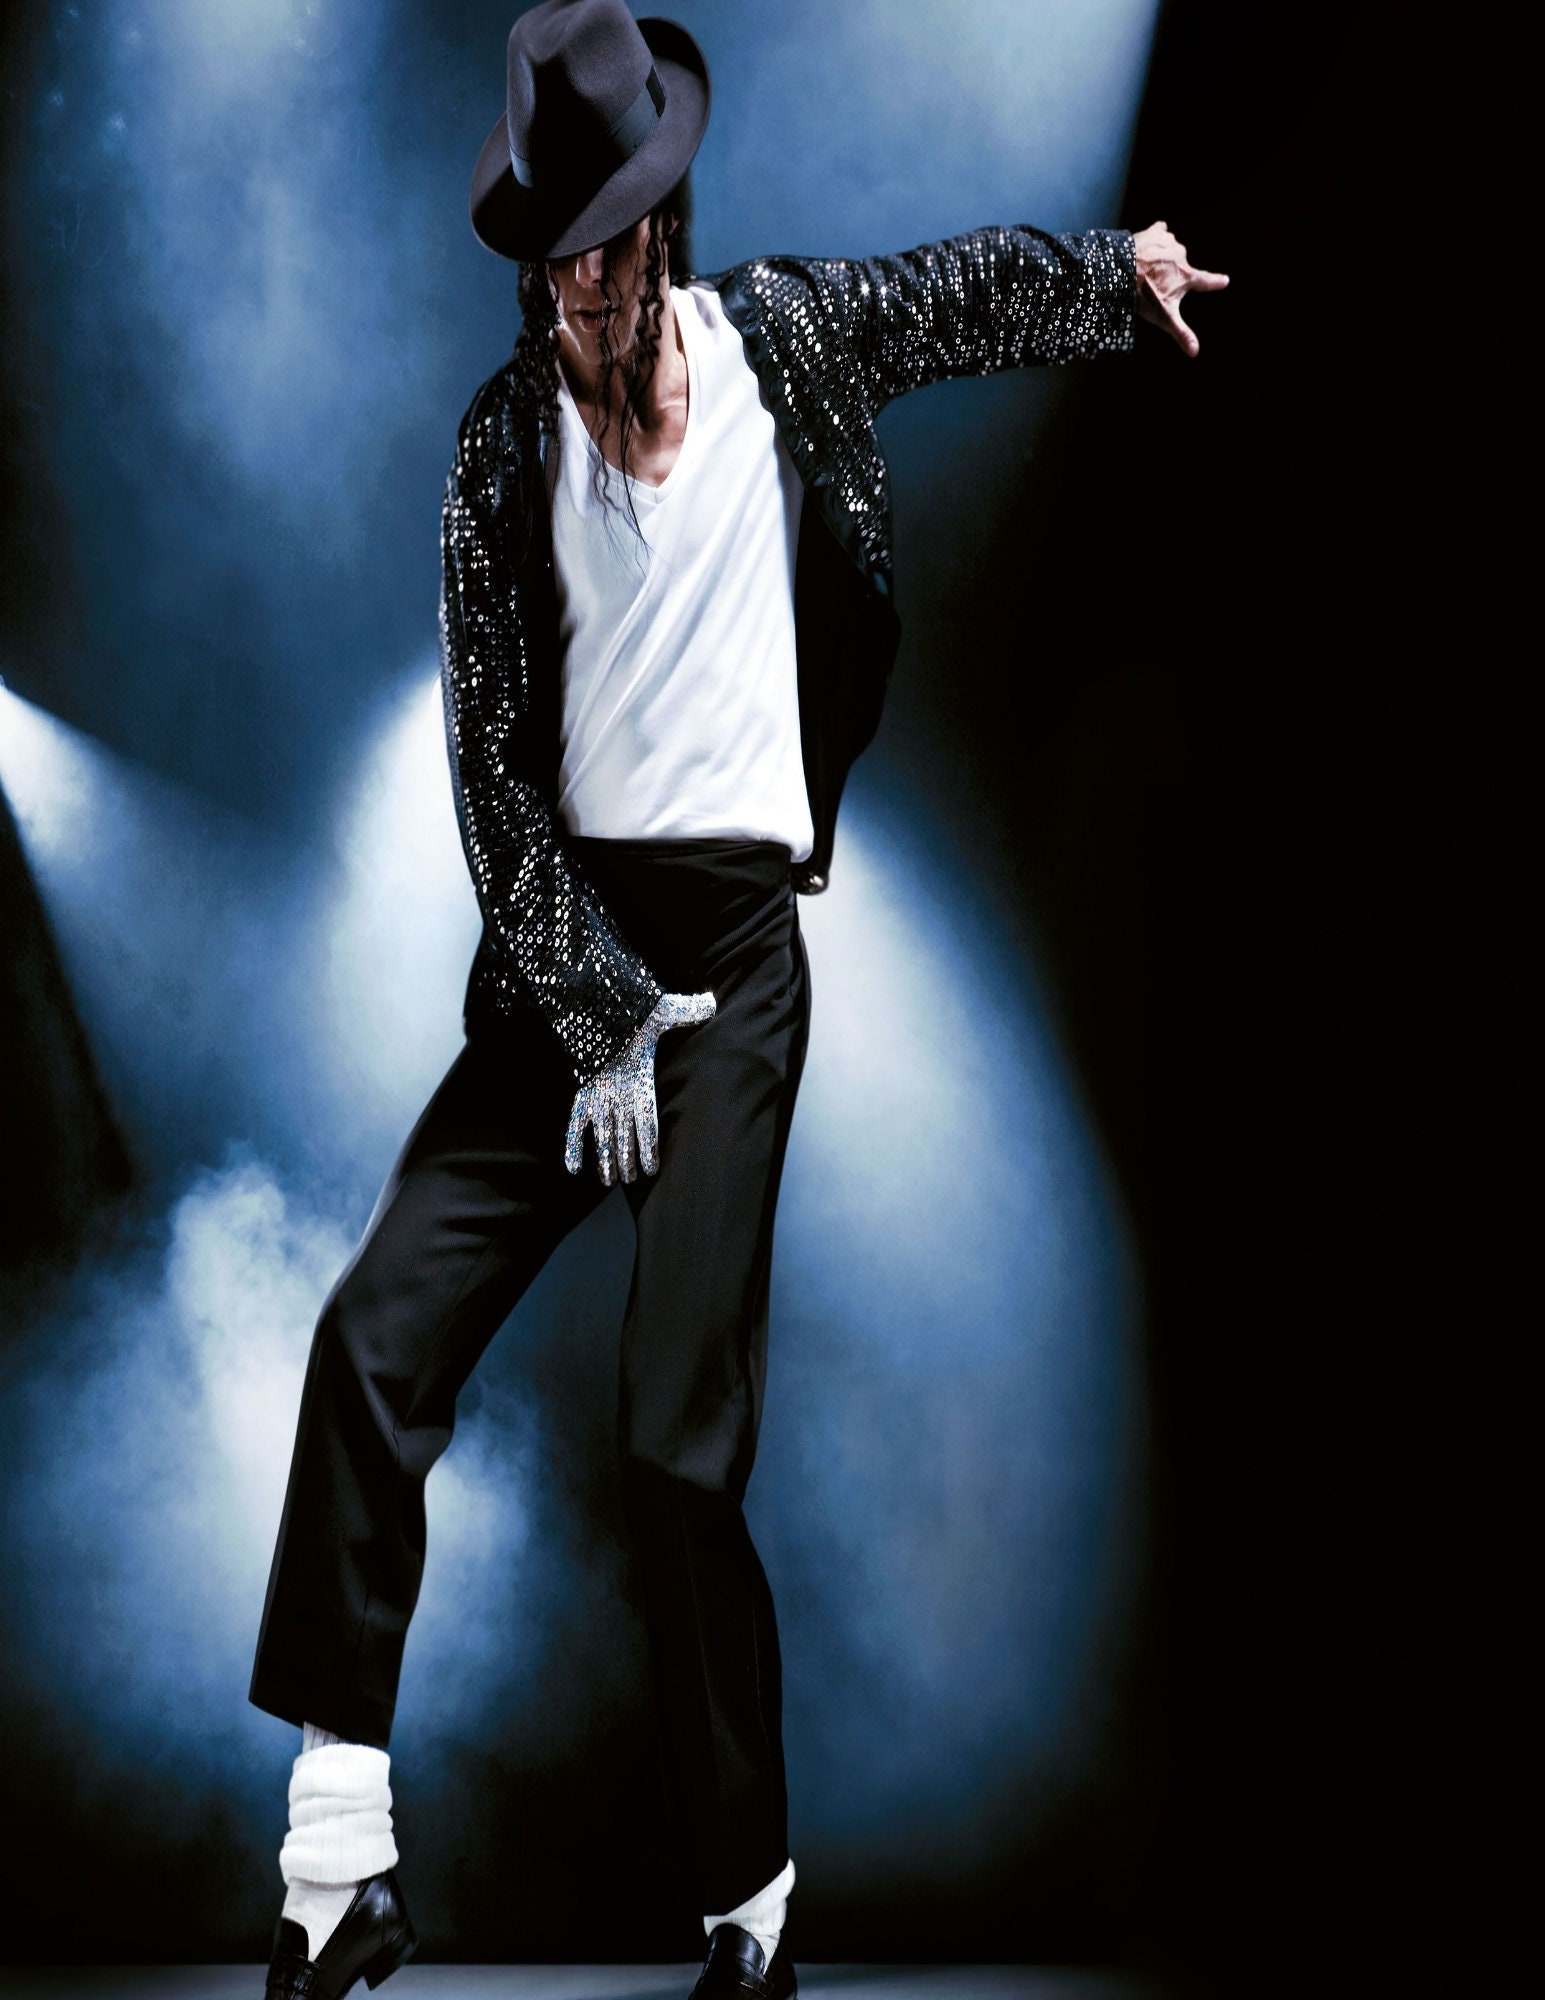 Royalty-Free photo: Michael Jackson sketch | PickPik